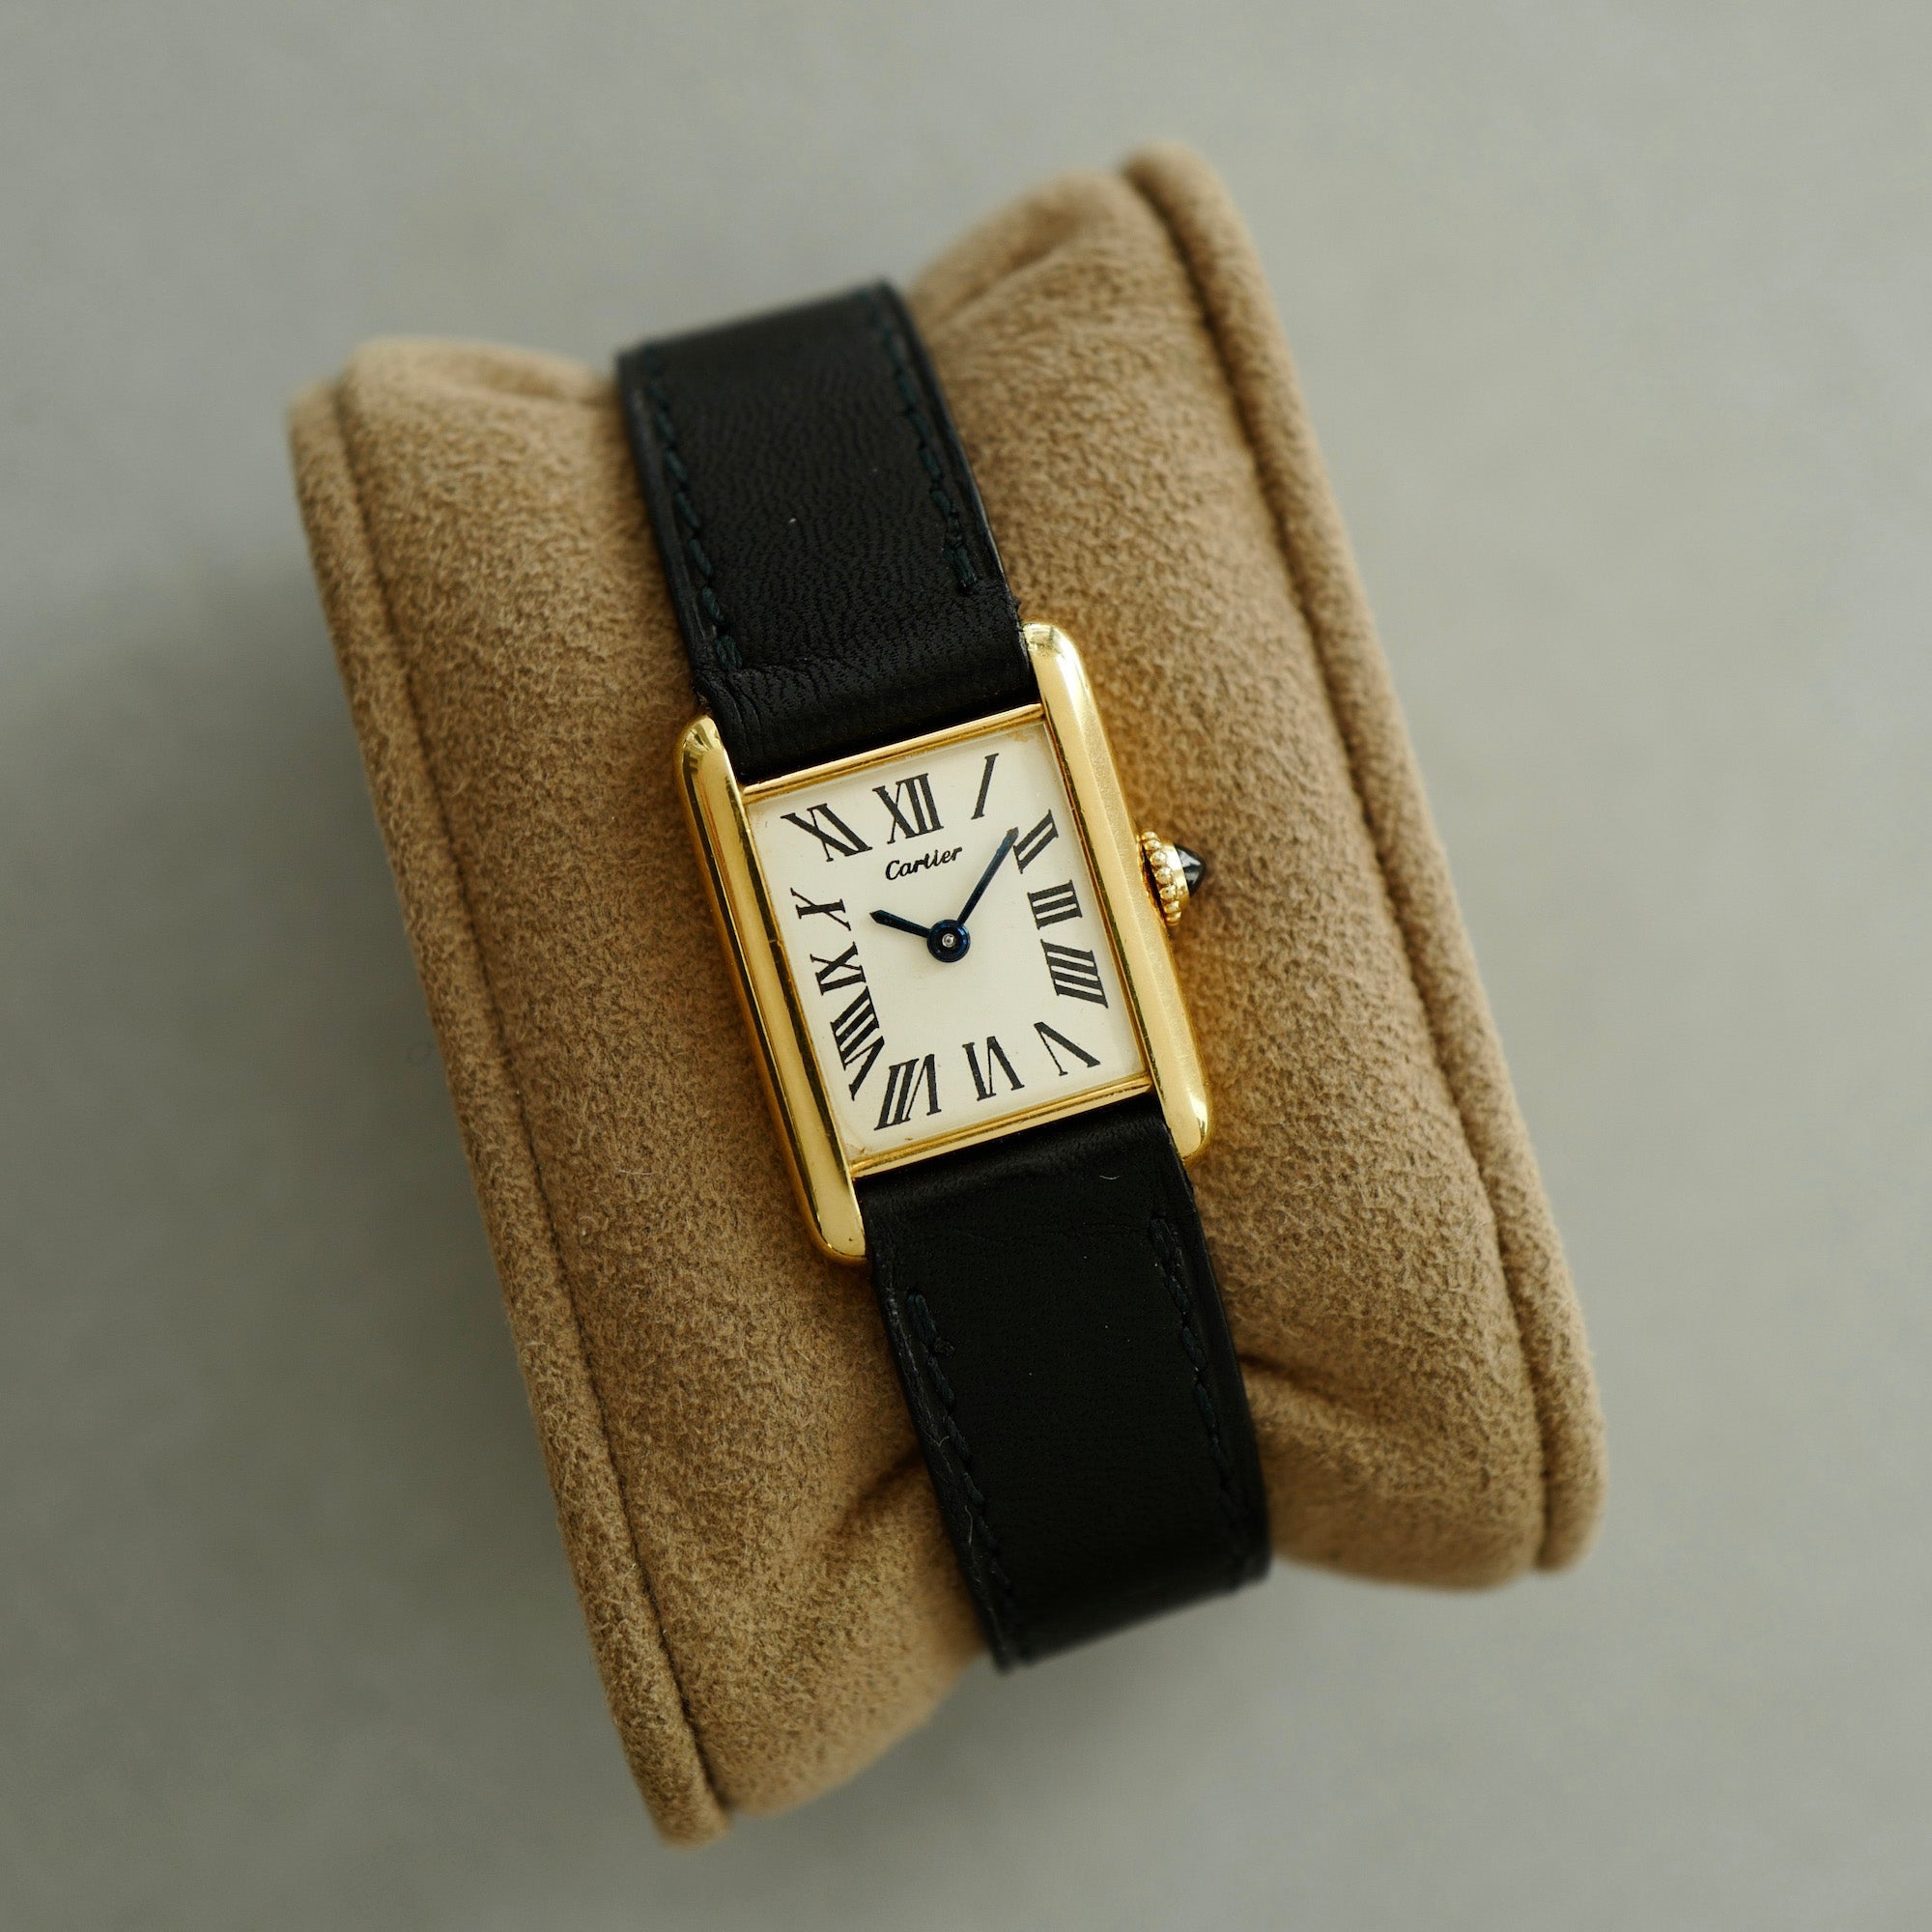 Cartier - Cartier London Yellow Gold Tank Watch - The Keystone Watches